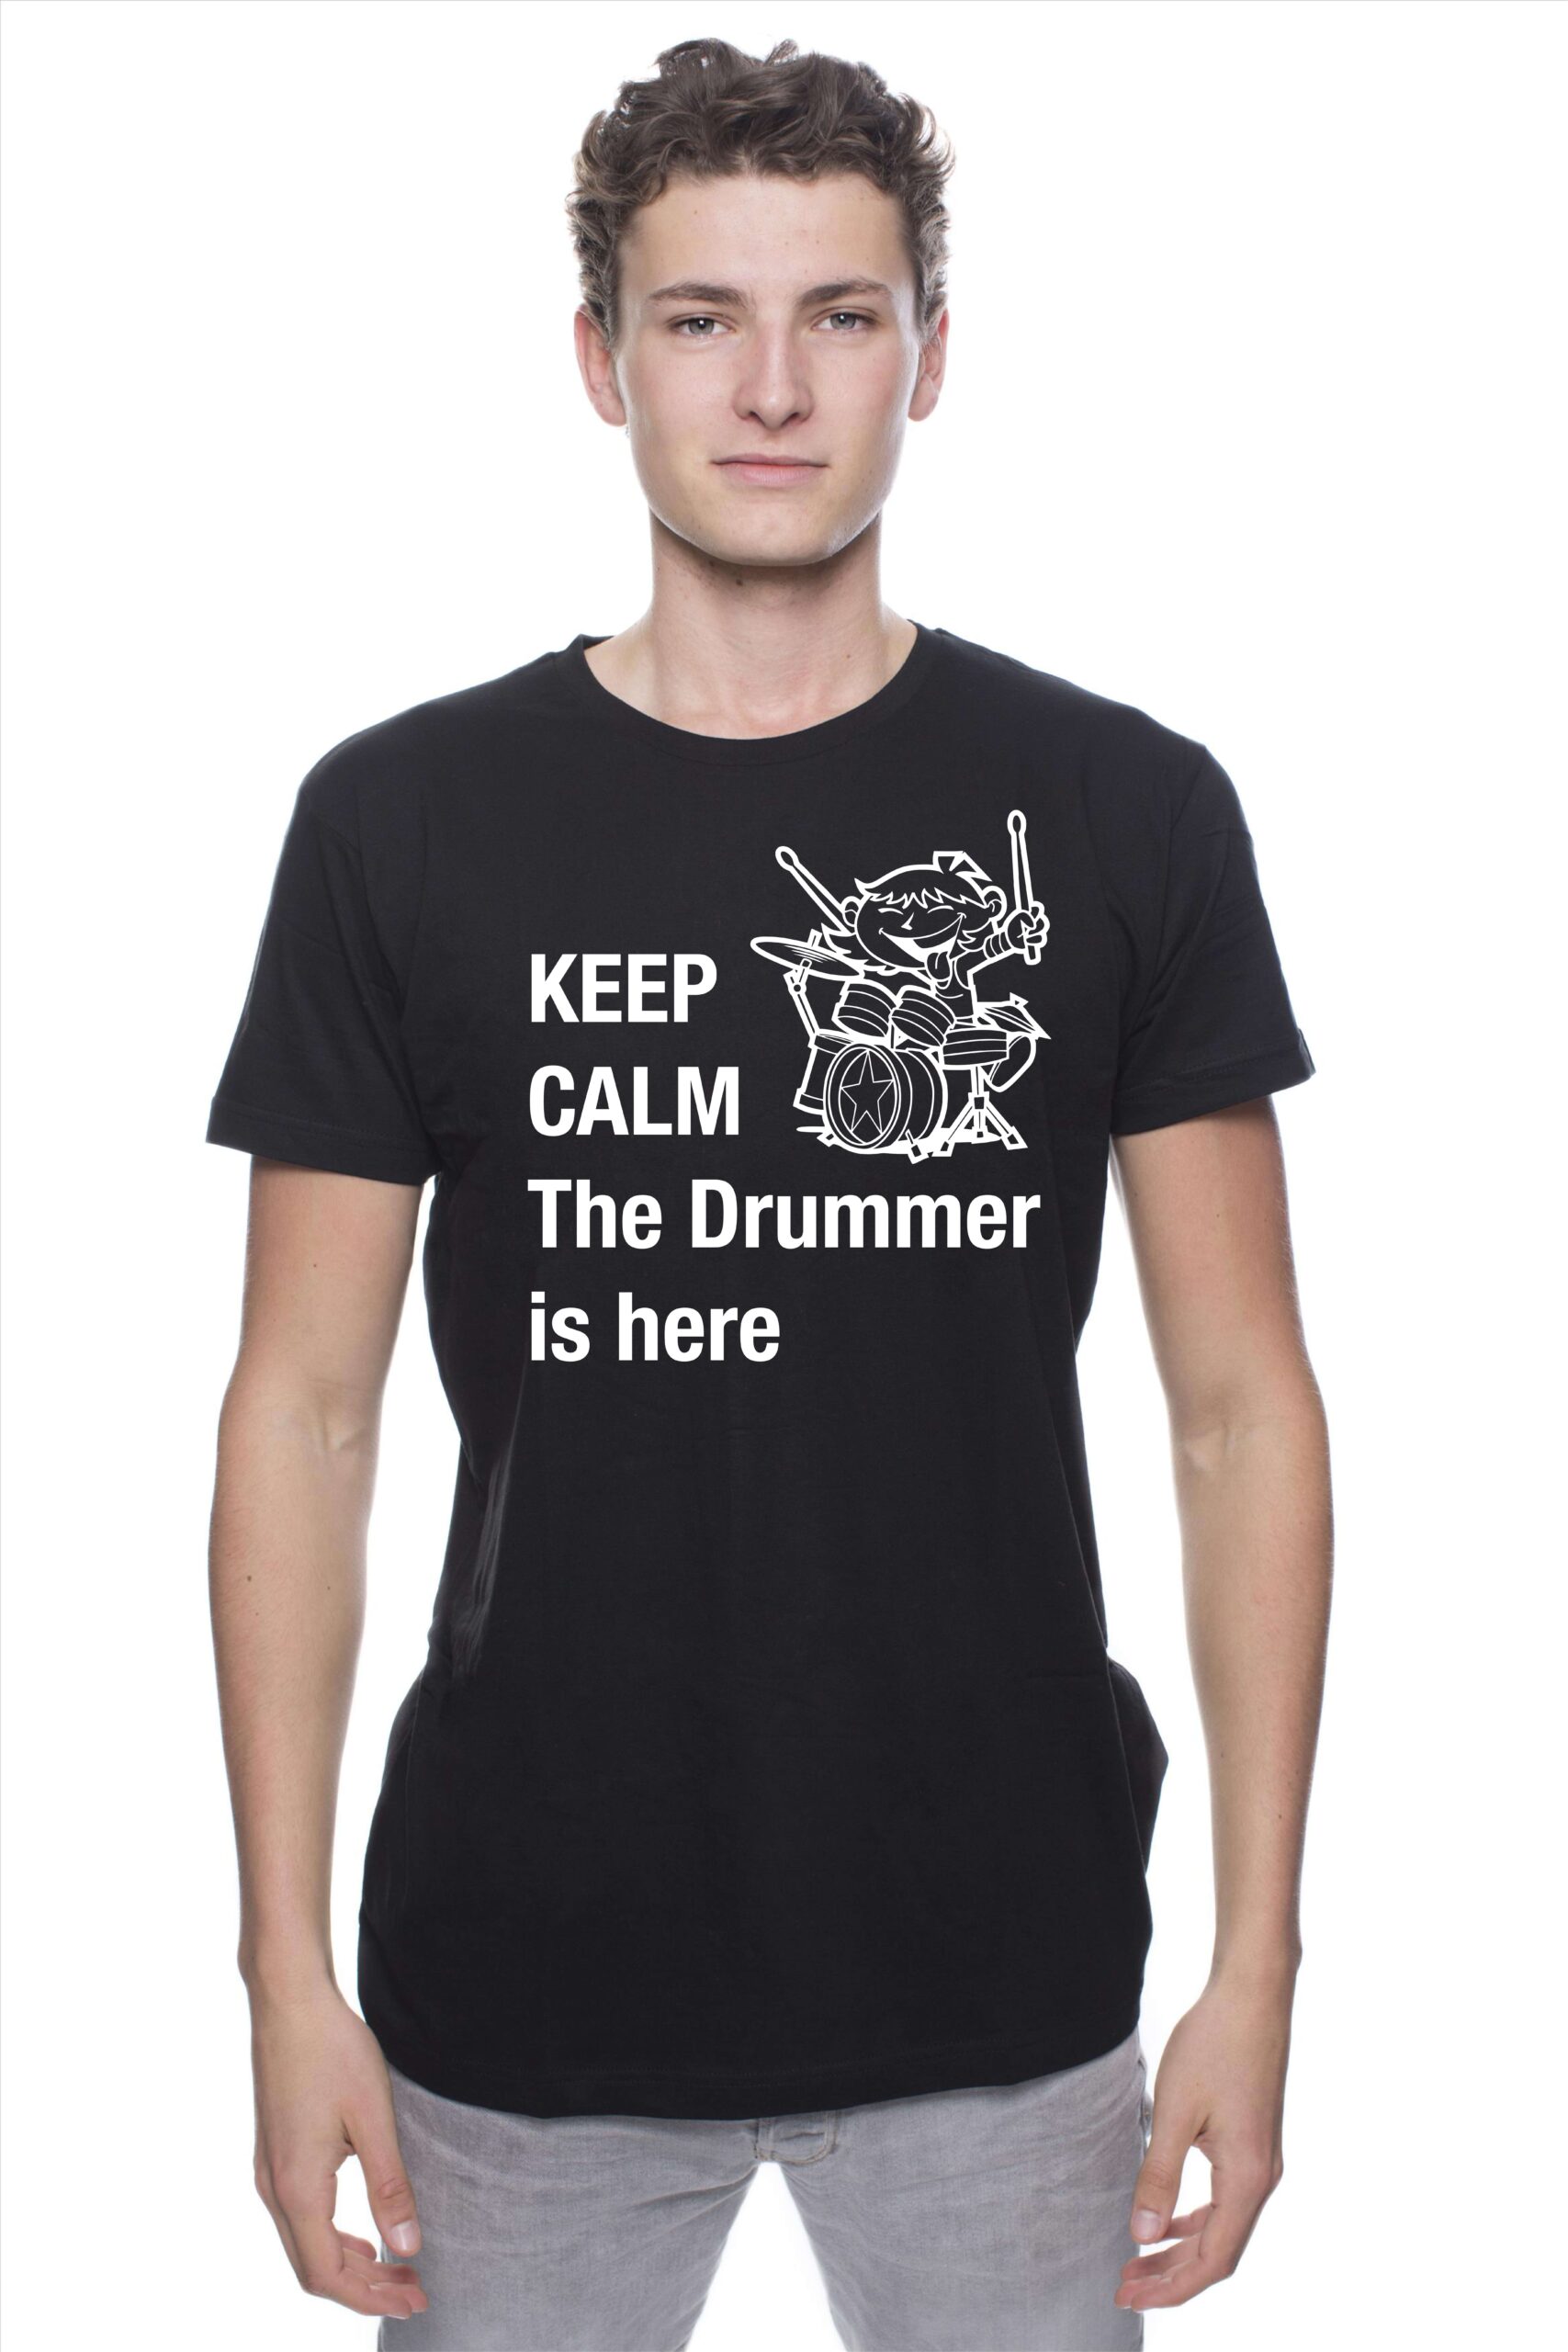 Keep calm, de drummer is here